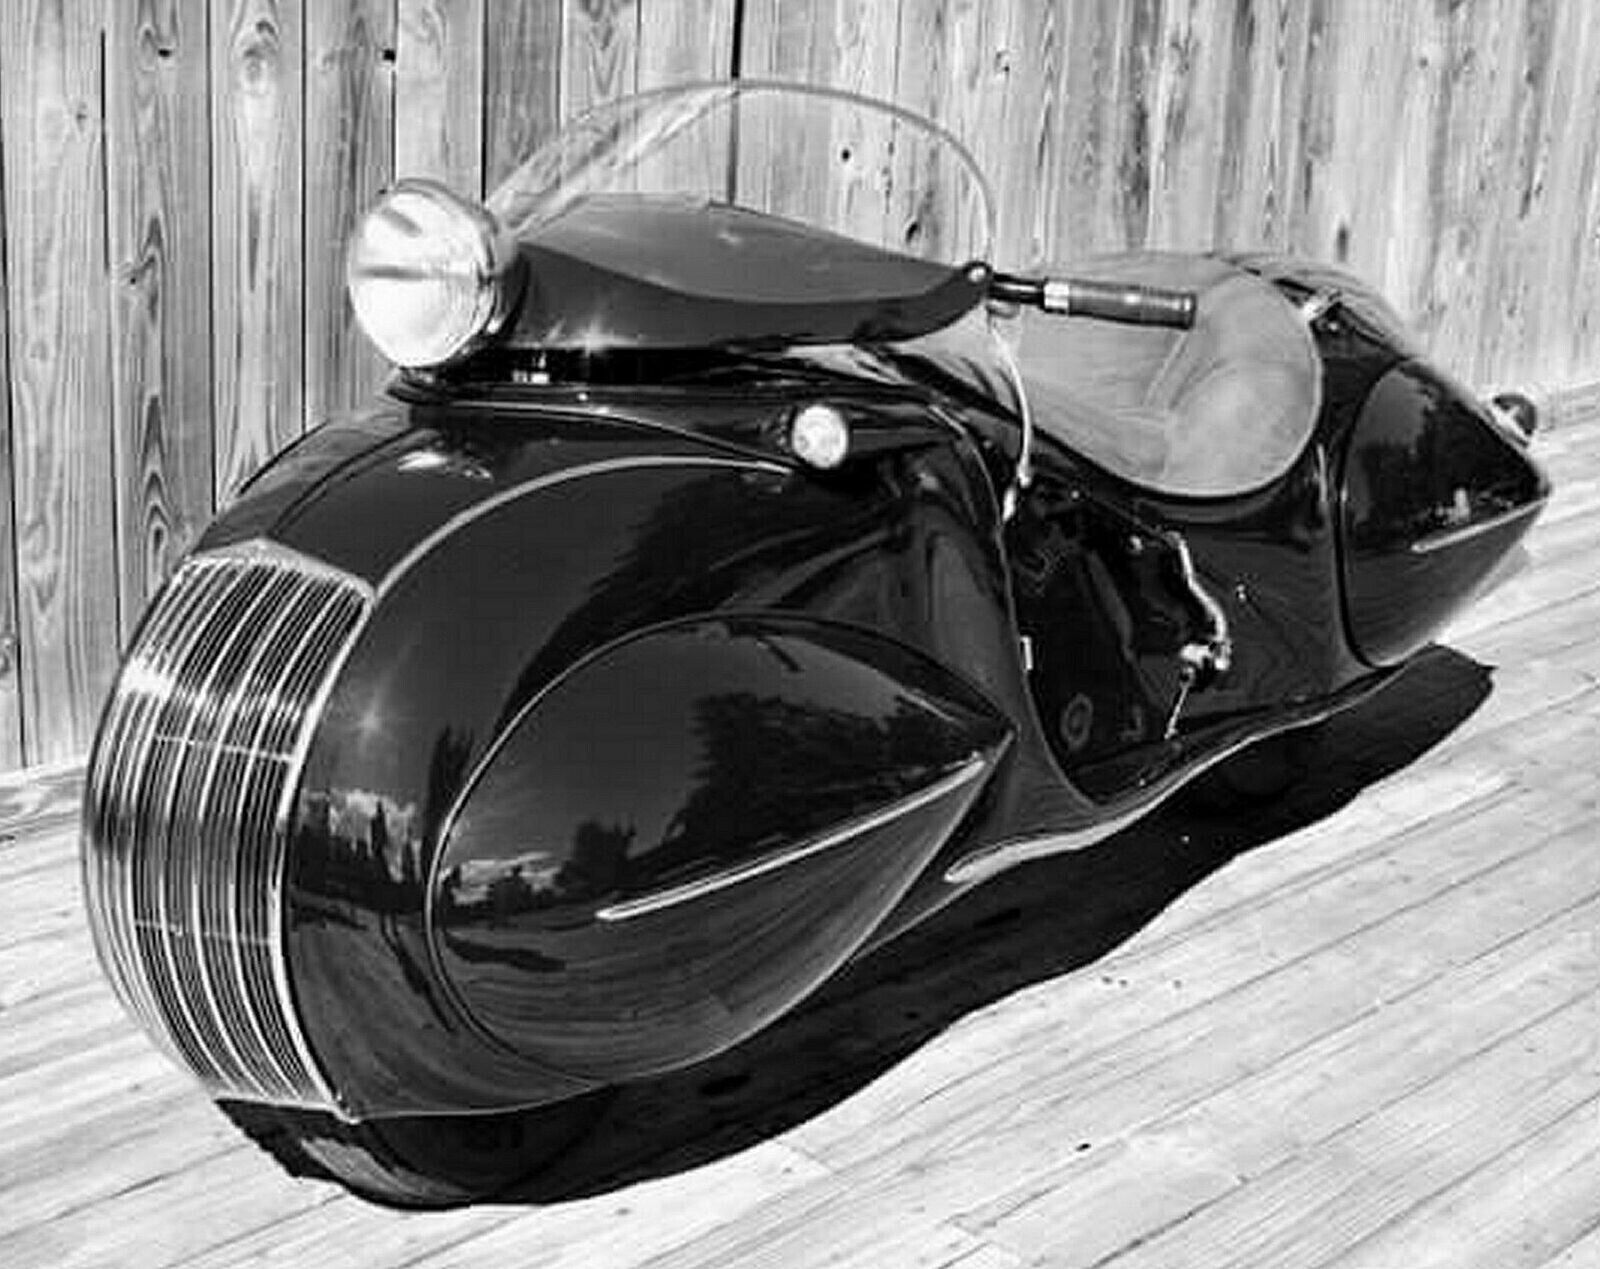 1936 HENDERSON Art Deco MOTORCYCLE Concept Bike Poster Photo 11x17